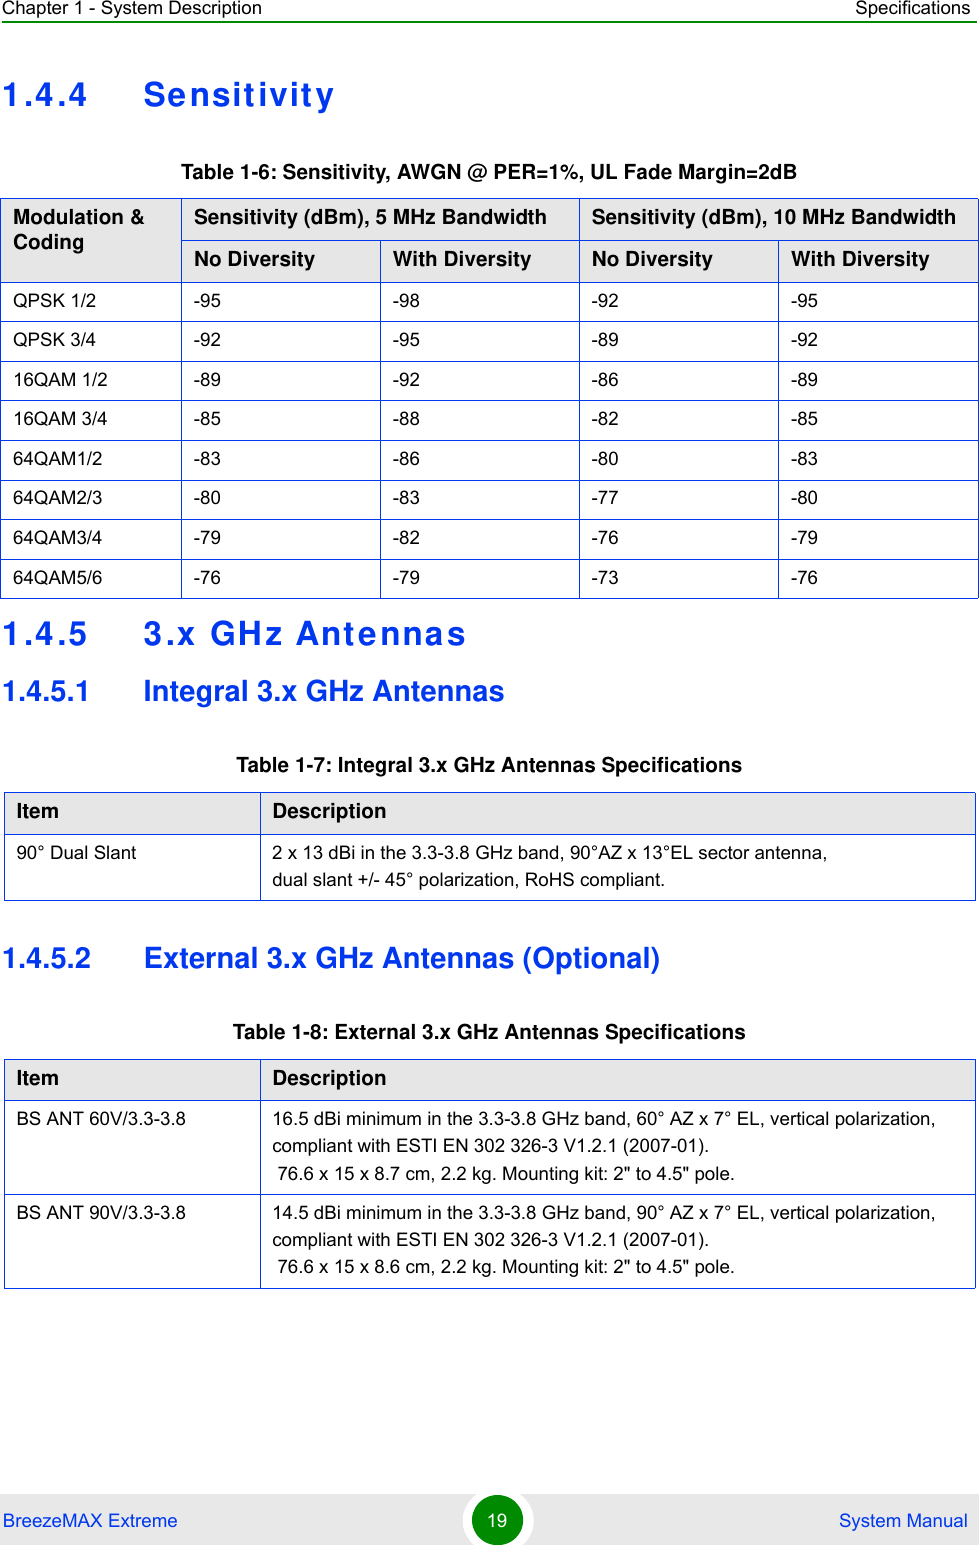 Chapter 1 - System Description SpecificationsBreezeMAX Extreme 19  System Manual1.4.4 Sensitivity1.4.5 3.x GHz Antennas1.4.5.1 Integral 3.x GHz Antennas1.4.5.2 External 3.x GHz Antennas (Optional)Table 1-6: Sensitivity, AWGN @ PER=1%, UL Fade Margin=2dBModulation &amp; Coding Sensitivity (dBm), 5 MHz Bandwidth Sensitivity (dBm), 10 MHz BandwidthNo Diversity With Diversity No Diversity With DiversityQPSK 1/2 -95 -98 -92 -95QPSK 3/4 -92 -95 -89 -9216QAM 1/2 -89 -92 -86 -8916QAM 3/4 -85 -88 -82 -8564QAM1/2 -83 -86 -80 -8364QAM2/3 -80 -83 -77 -8064QAM3/4 -79 -82 -76 -7964QAM5/6 -76 -79 -73 -76Table 1-7: Integral 3.x GHz Antennas SpecificationsItem Description90° Dual Slant 2 x 13 dBi in the 3.3-3.8 GHz band, 90°AZ x 13°EL sector antenna, dual slant +/- 45° polarization, RoHS compliant.Table 1-8: External 3.x GHz Antennas SpecificationsItem DescriptionBS ANT 60V/3.3-3.8 16.5 dBi minimum in the 3.3-3.8 GHz band, 60° AZ x 7° EL, vertical polarization, compliant with ESTI EN 302 326-3 V1.2.1 (2007-01). 76.6 x 15 x 8.7 cm, 2.2 kg. Mounting kit: 2&quot; to 4.5&quot; pole.BS ANT 90V/3.3-3.8 14.5 dBi minimum in the 3.3-3.8 GHz band, 90° AZ x 7° EL, vertical polarization, compliant with ESTI EN 302 326-3 V1.2.1 (2007-01). 76.6 x 15 x 8.6 cm, 2.2 kg. Mounting kit: 2&quot; to 4.5&quot; pole.